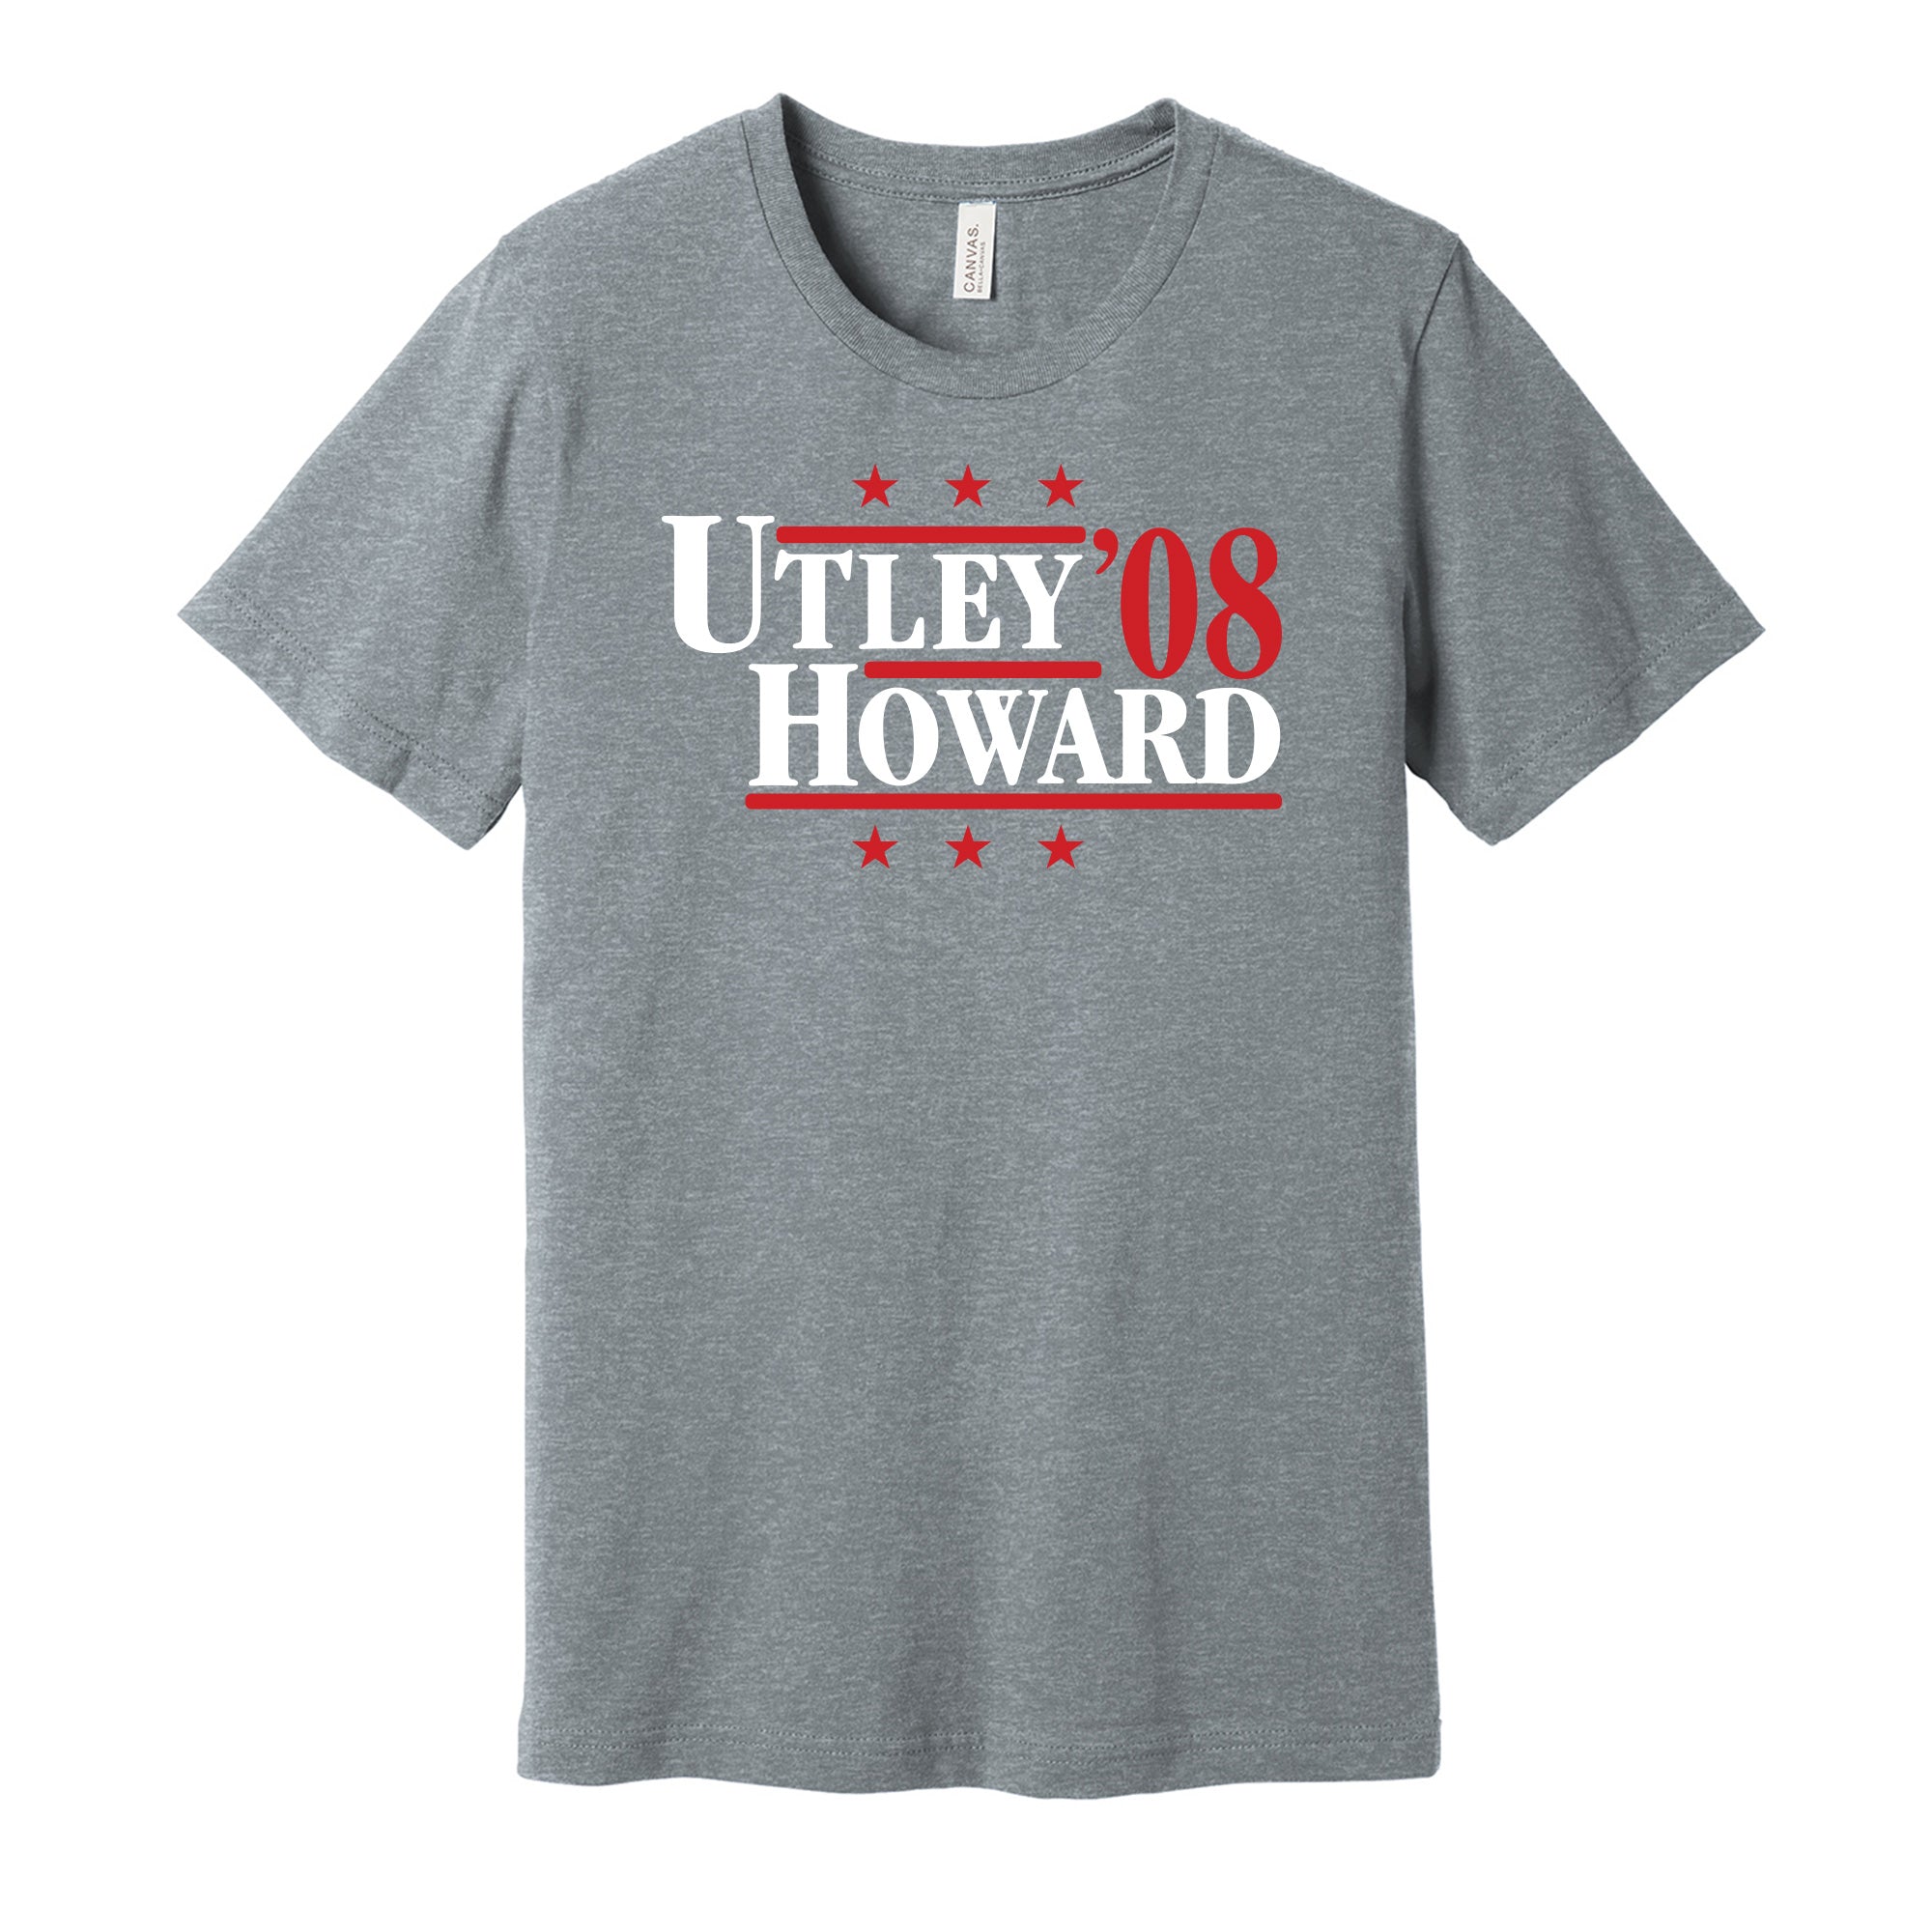 Utley & Howard '08 - Philadelphia Baseball Legends Political Campaign Parody T-Shirt - Hyper Than Hype Shirts S / Grey Shirt